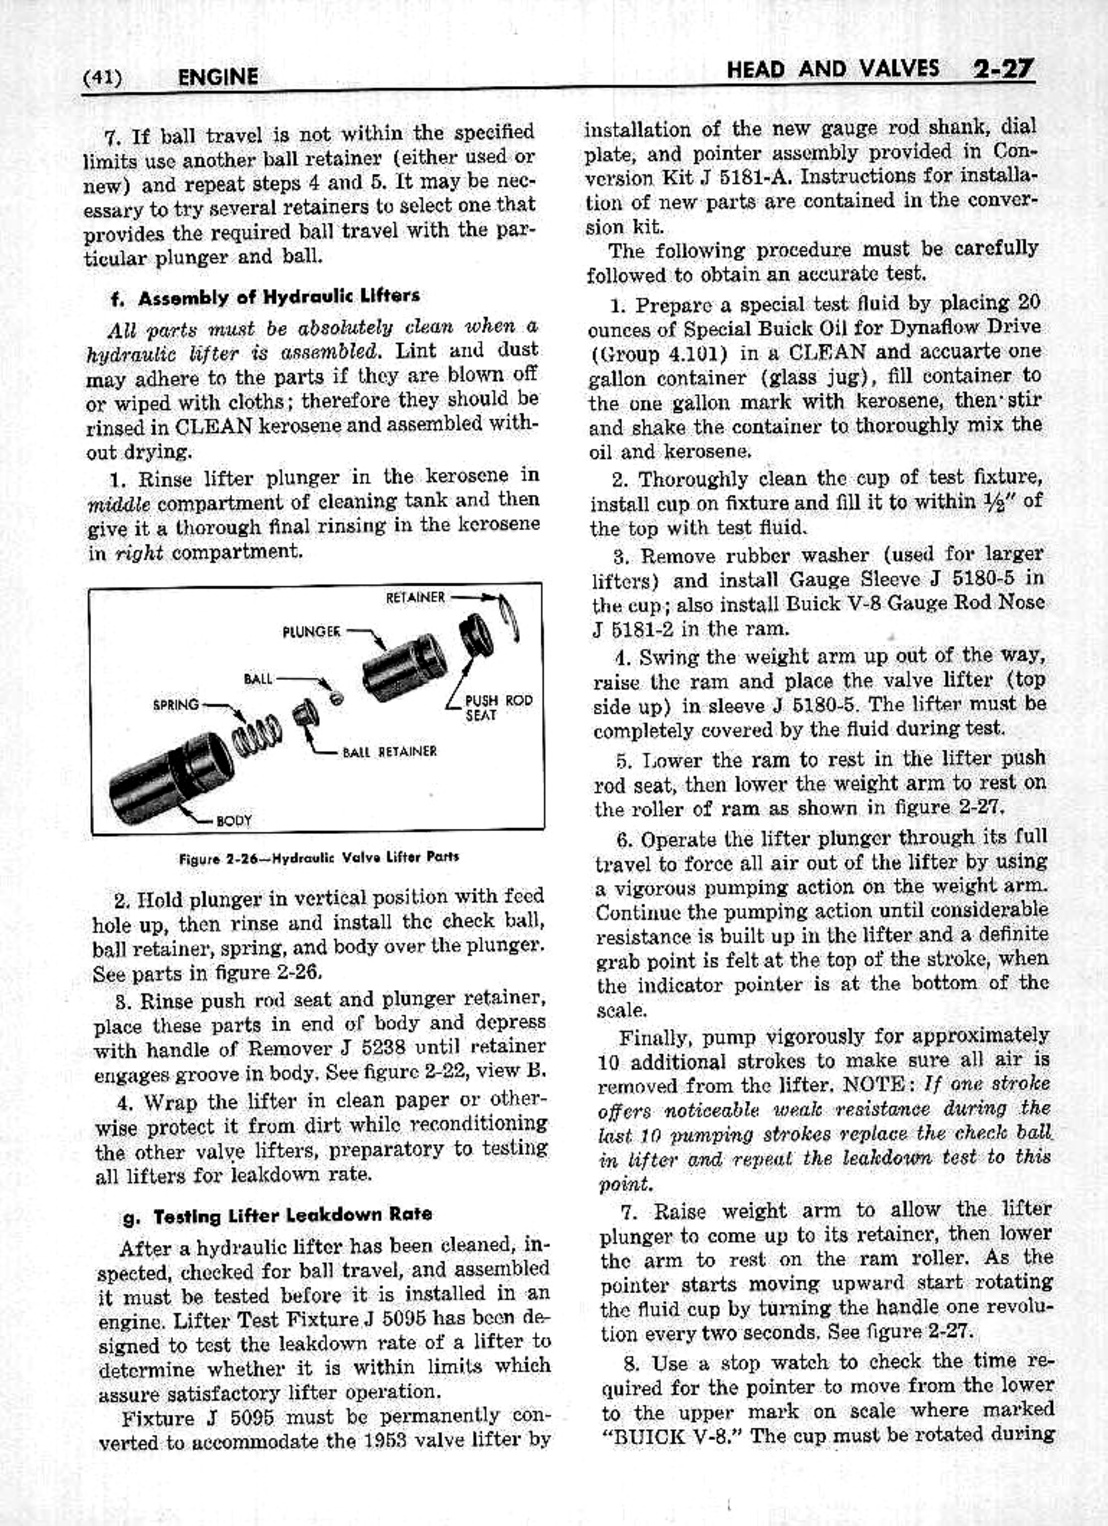 n_03 1953 Buick Shop Manual - Engine-027-027.jpg